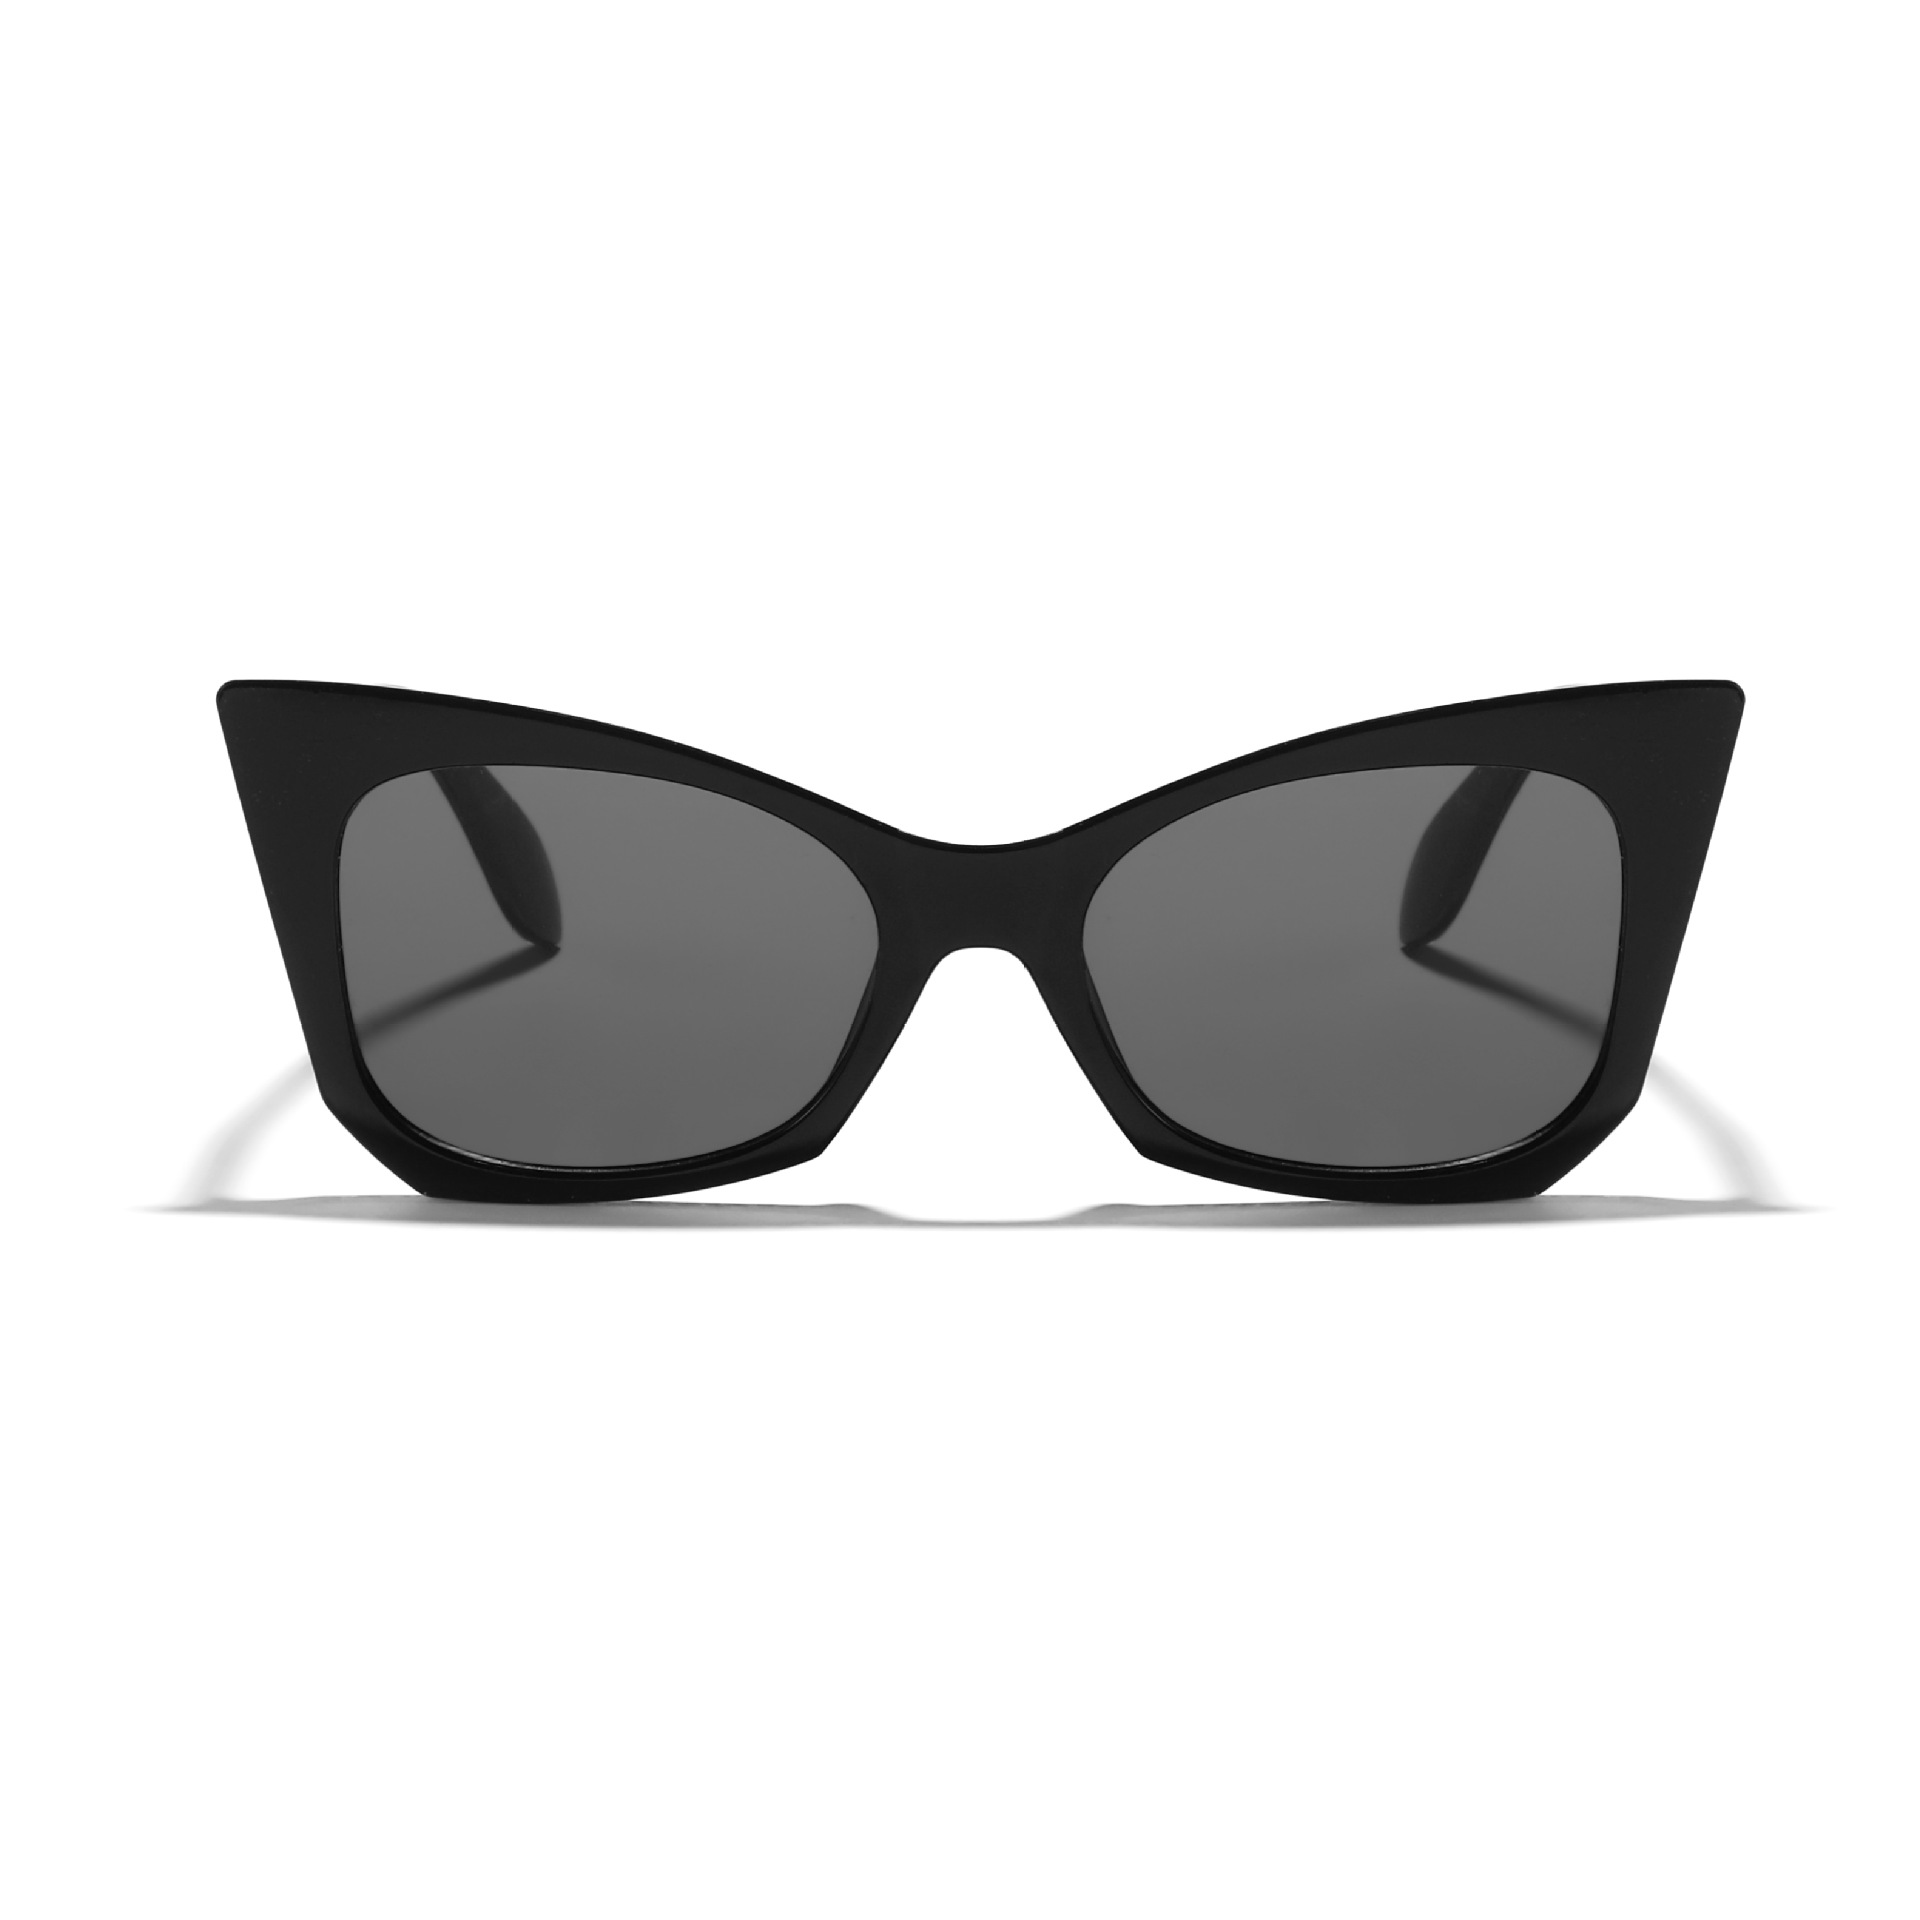 Cat's Eye Retro Sunglasses New Women's Sun Protection Driving Sunglasses UV Protection Advanced Sense Sunglasses